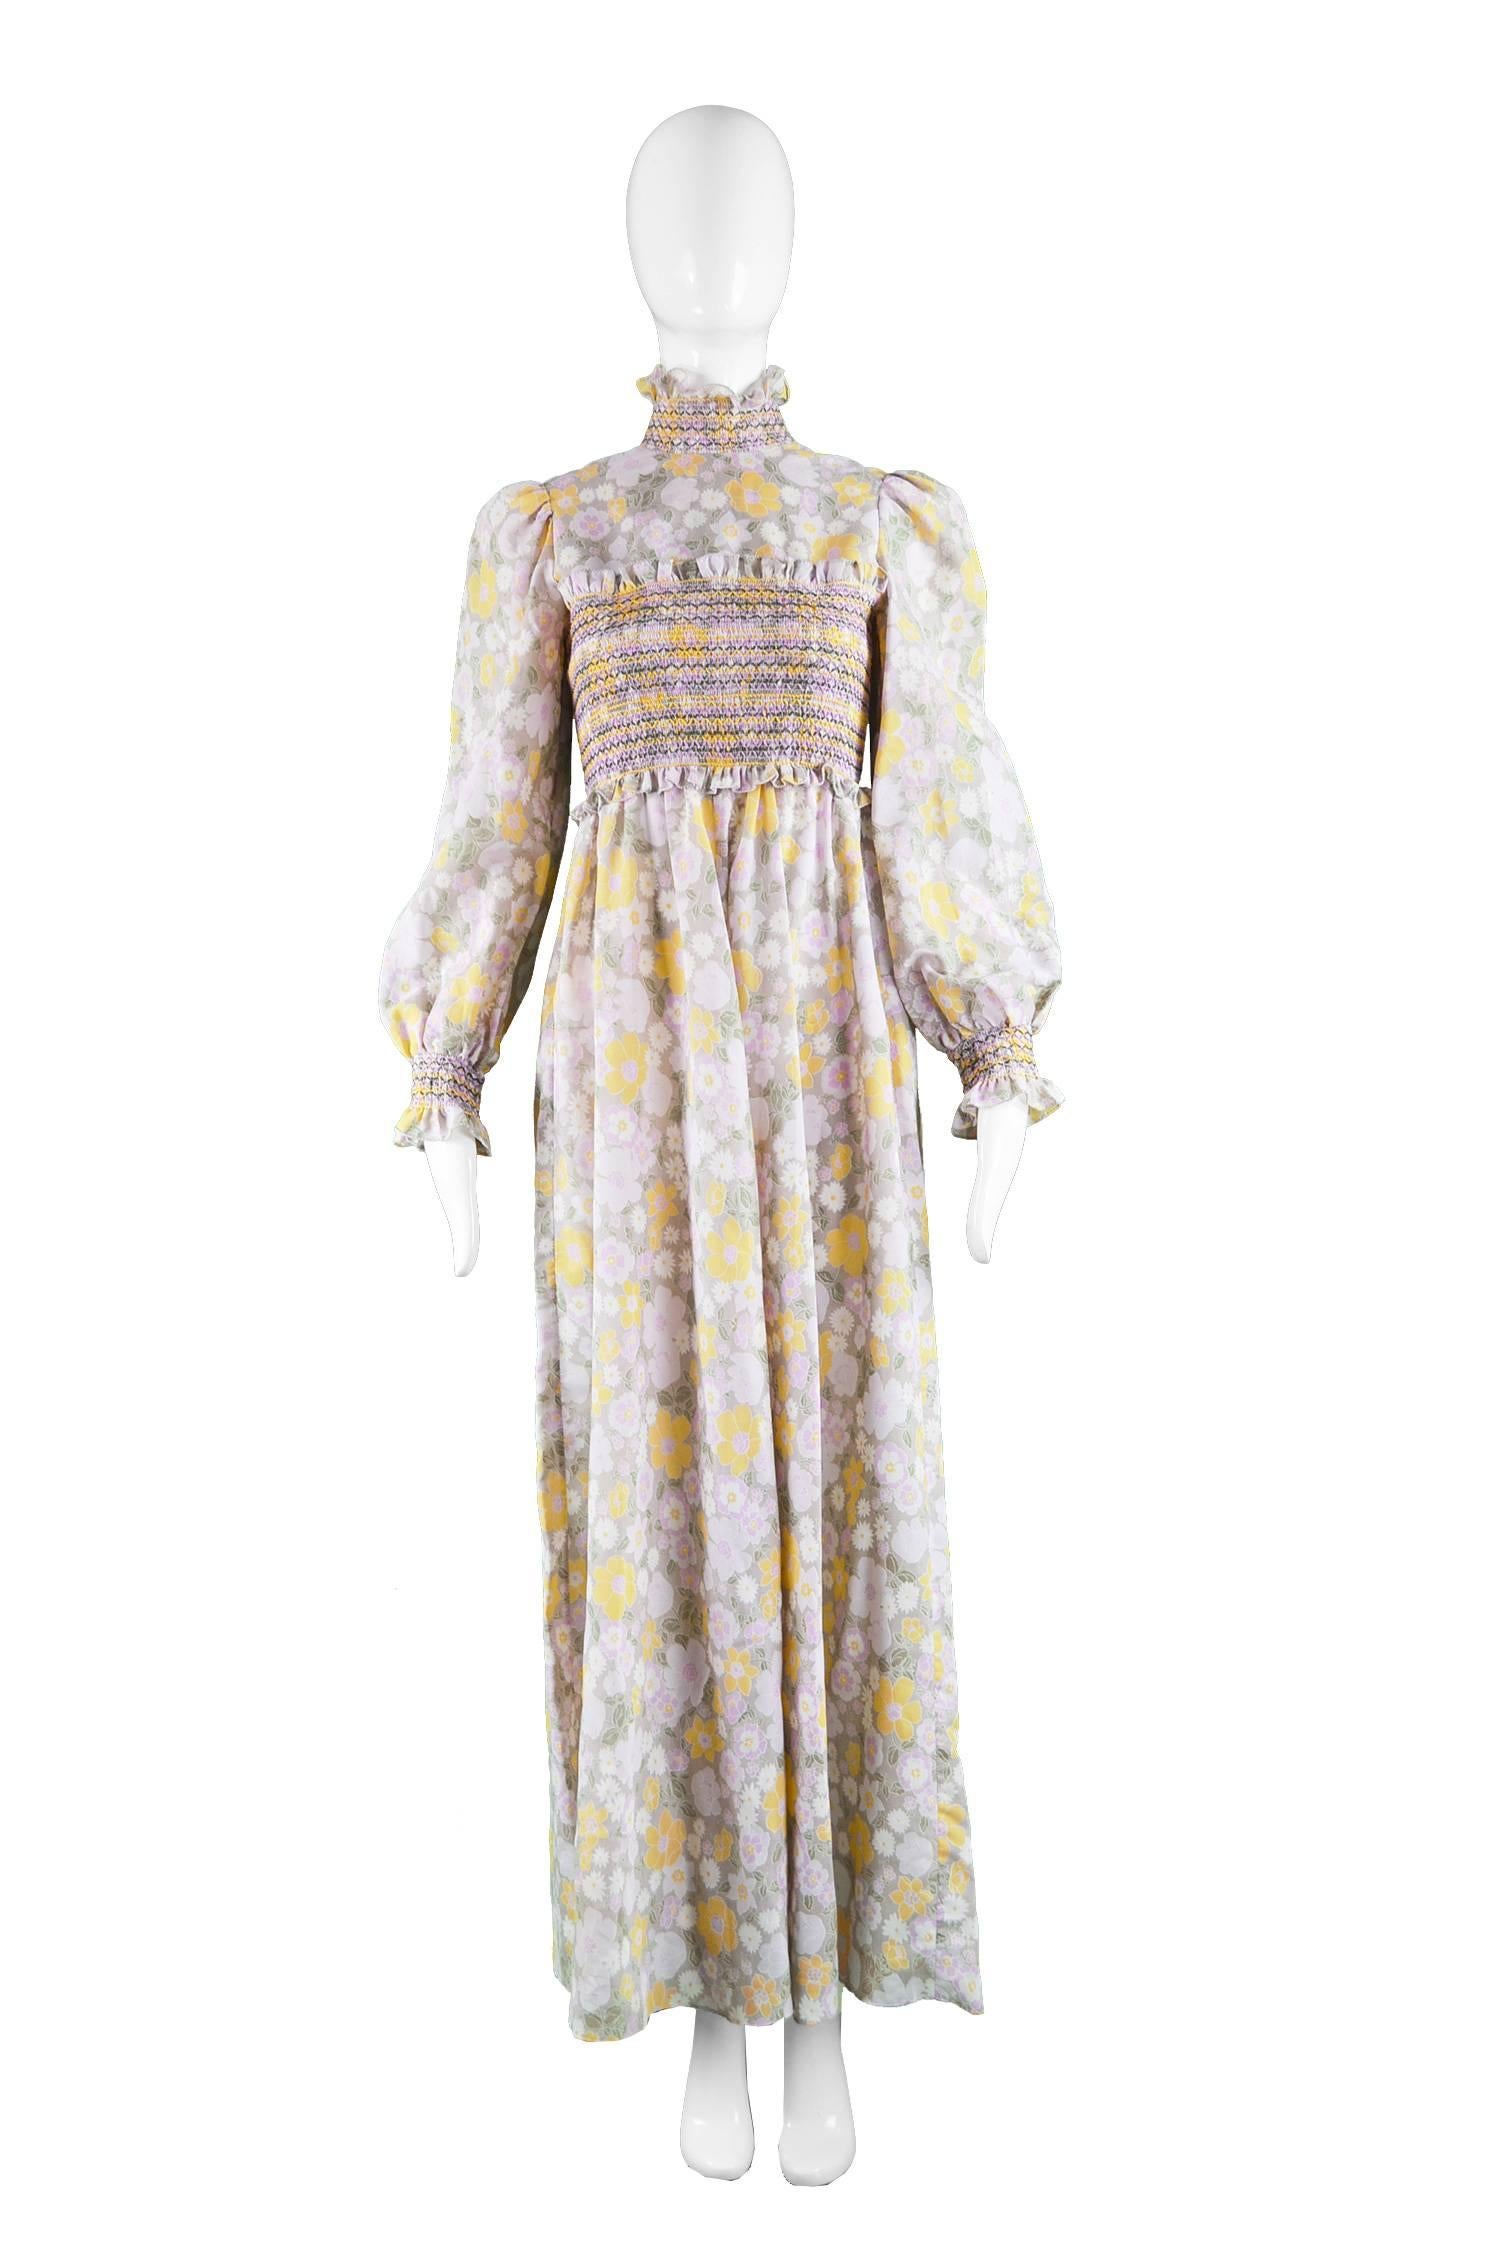 Roland Klein for Marcel Fenez Smocked Floral Voile Maxi Dress, 1970s

Estimated Size: UK 6/ US 2/ EU 34. Please check measurements. 
Bust - 32” / 81cm
Waist - 24” / 61cm
Hips - Free
Length (Shoulder to Hem) - 55” / 140cm
Sleeve Pit to Cuff - 19” /